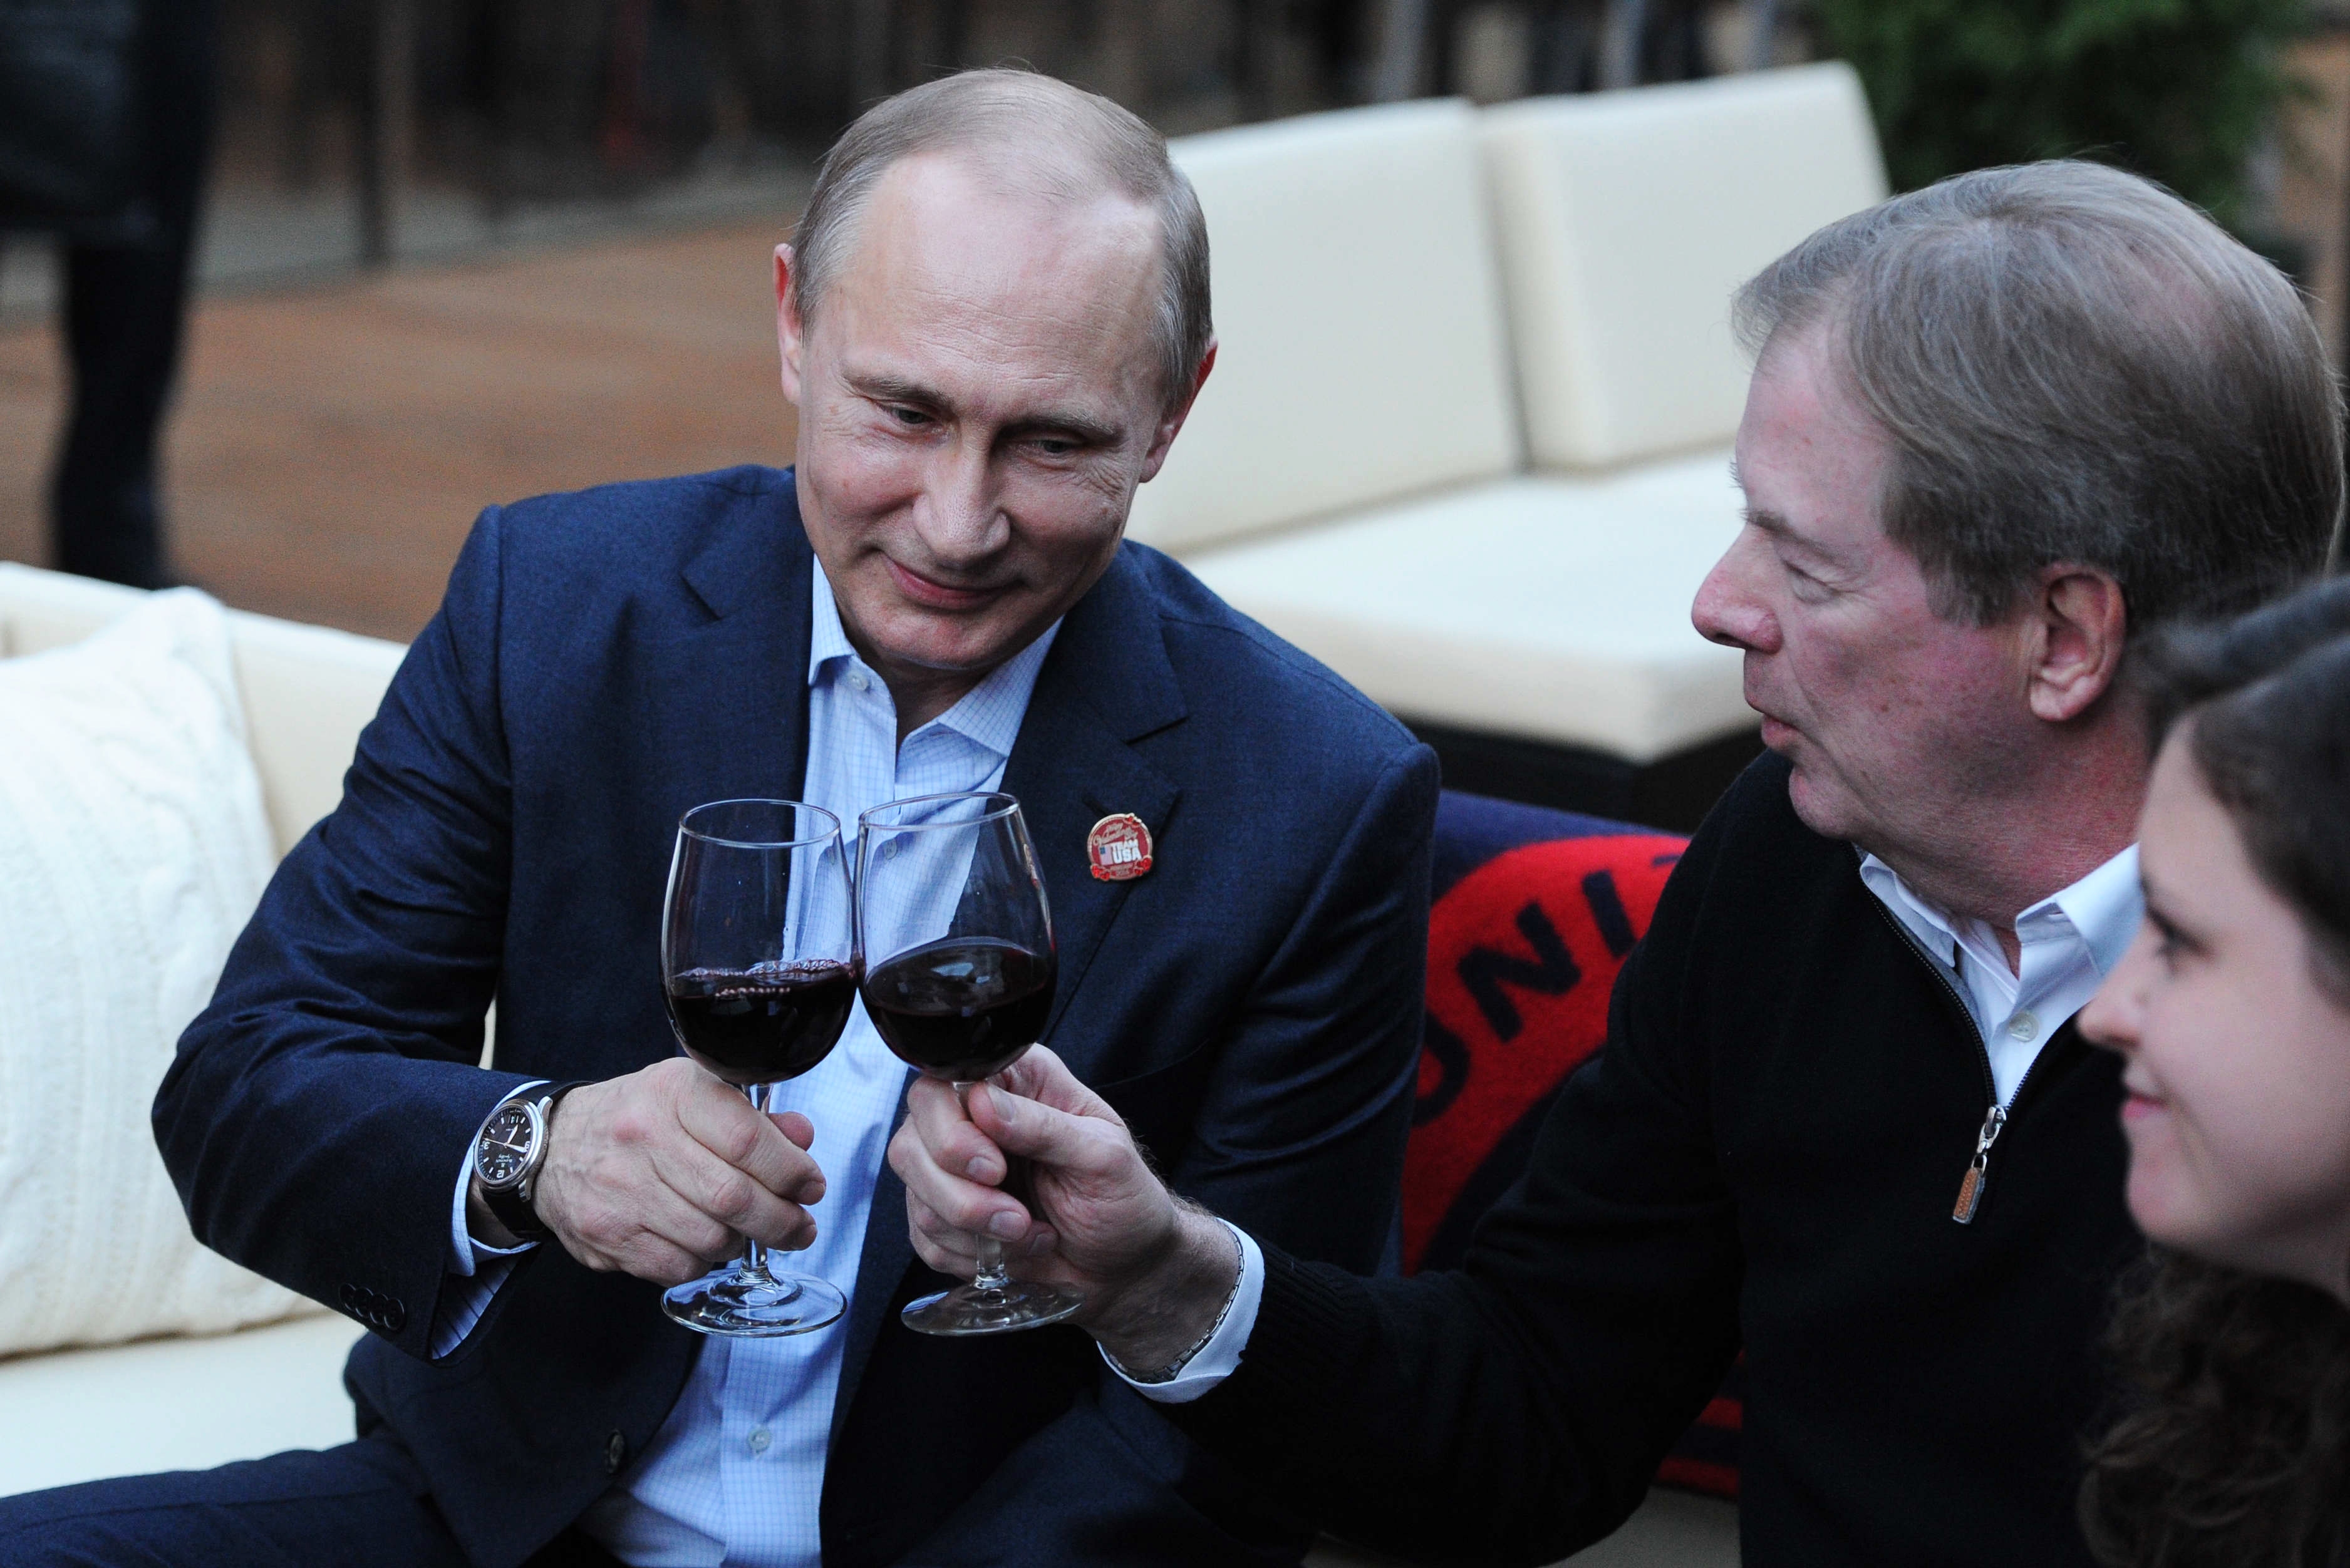 Winter Olympics Vladimir Putin Dons Team Usa Pin Drinks Wine At U S Olympic House Cbs News